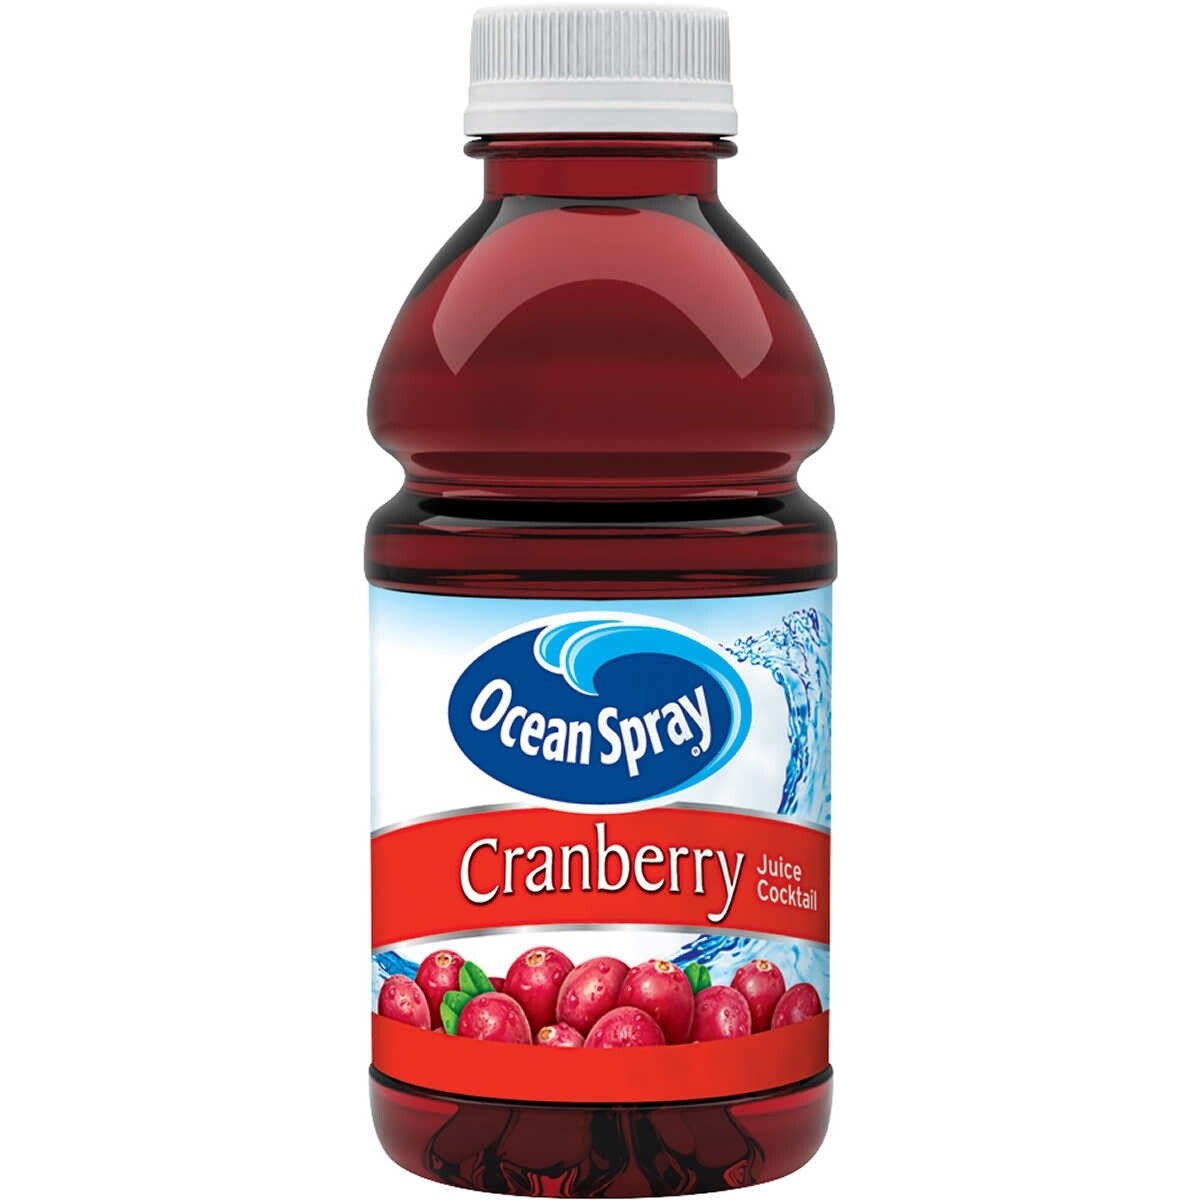 Ocean Spray cranberry/10 oz